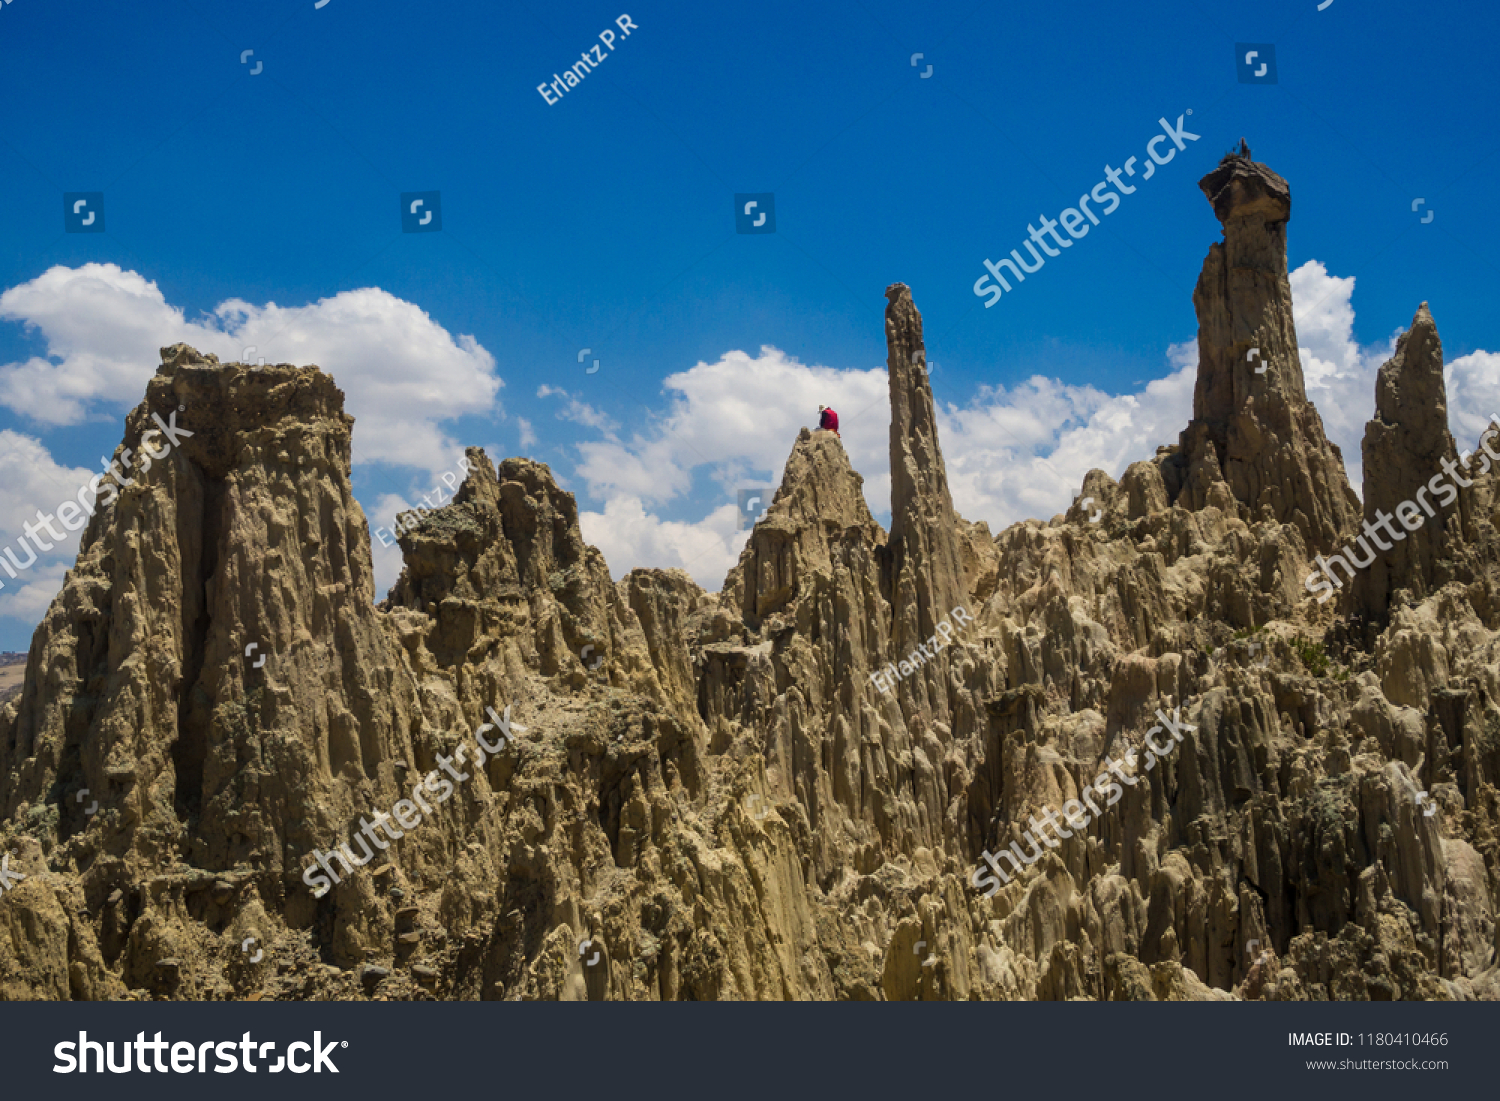 Unique geological formations cliffs shapes, Moon Valley park, La Paz mountains, Bolivia tourist travel destination. The Andes #1180410466